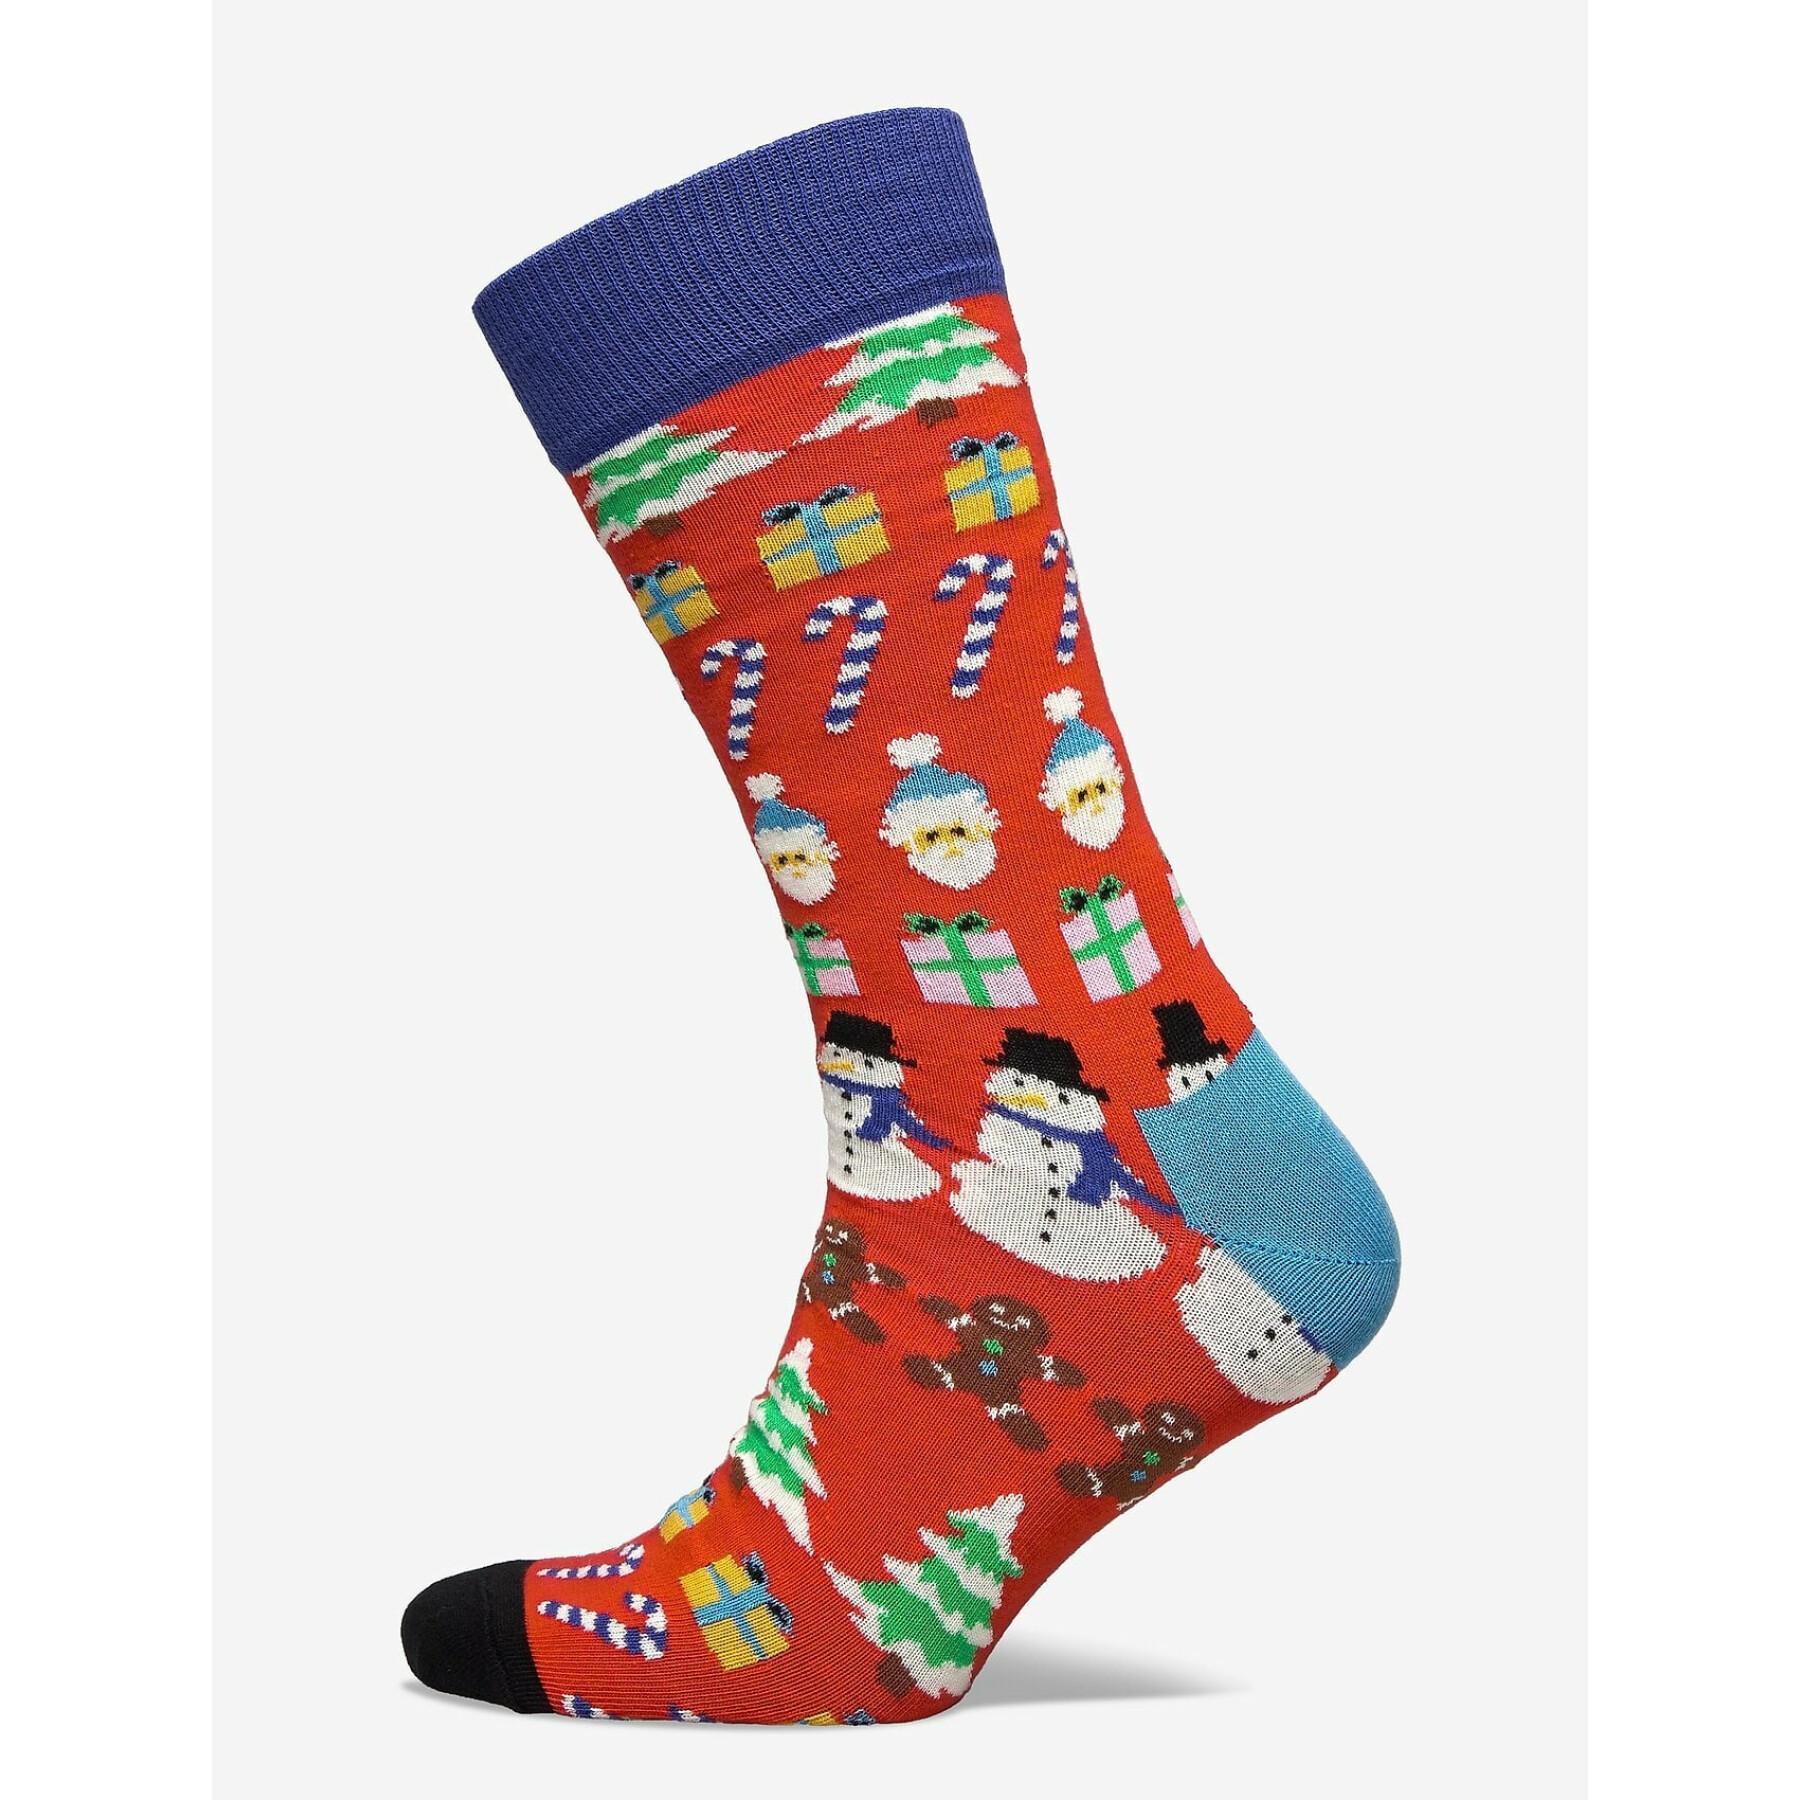 Meias Happy socks All i want for chrismas